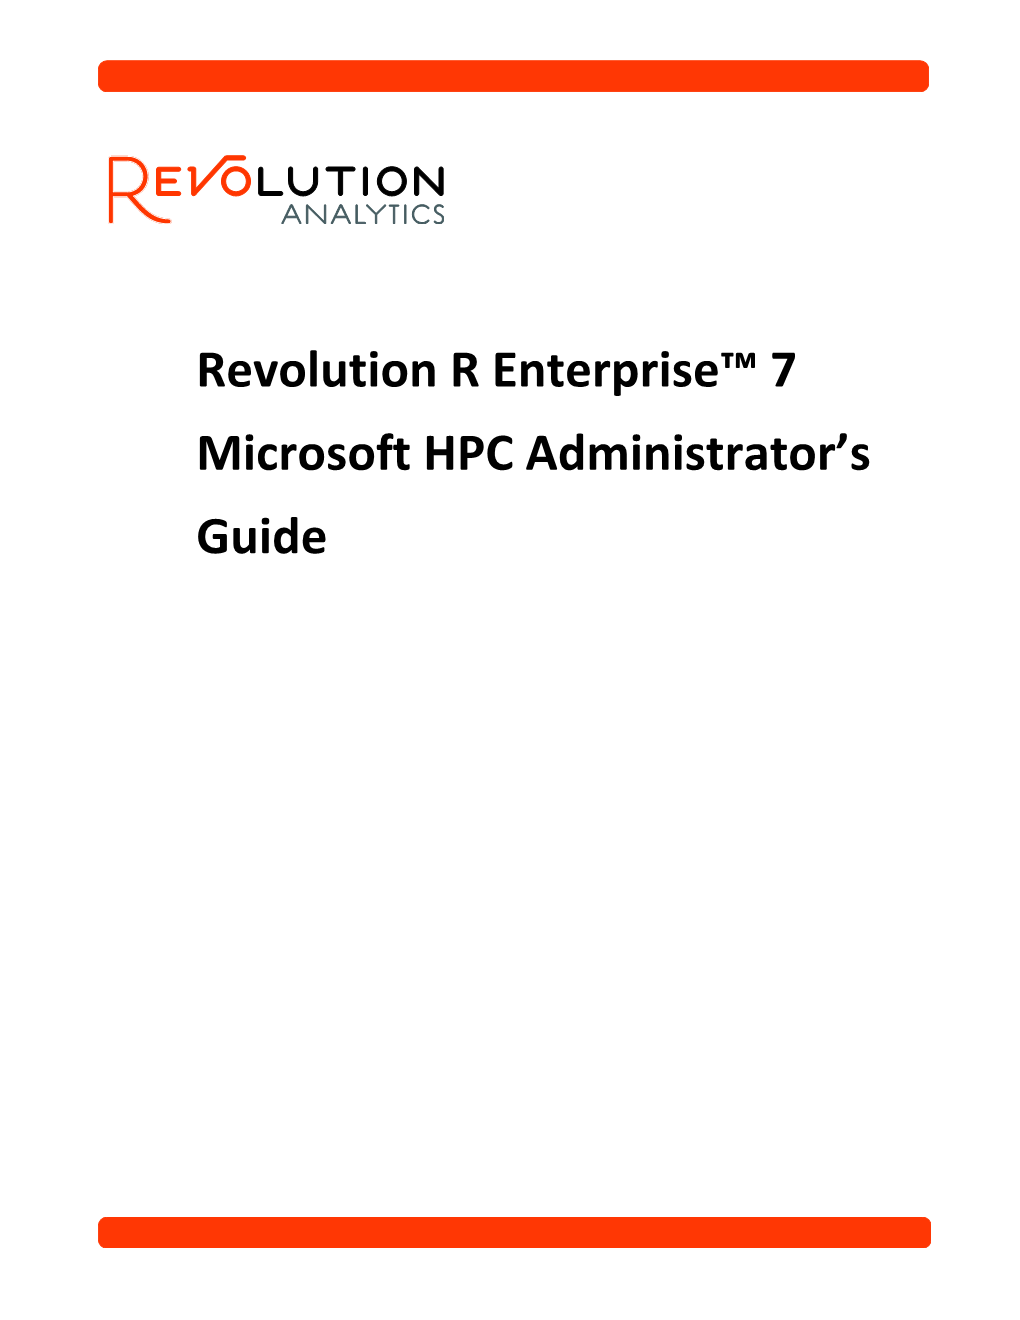 Revolution R Enterprise™ 7 Microsoft HPC Administrator's Guide